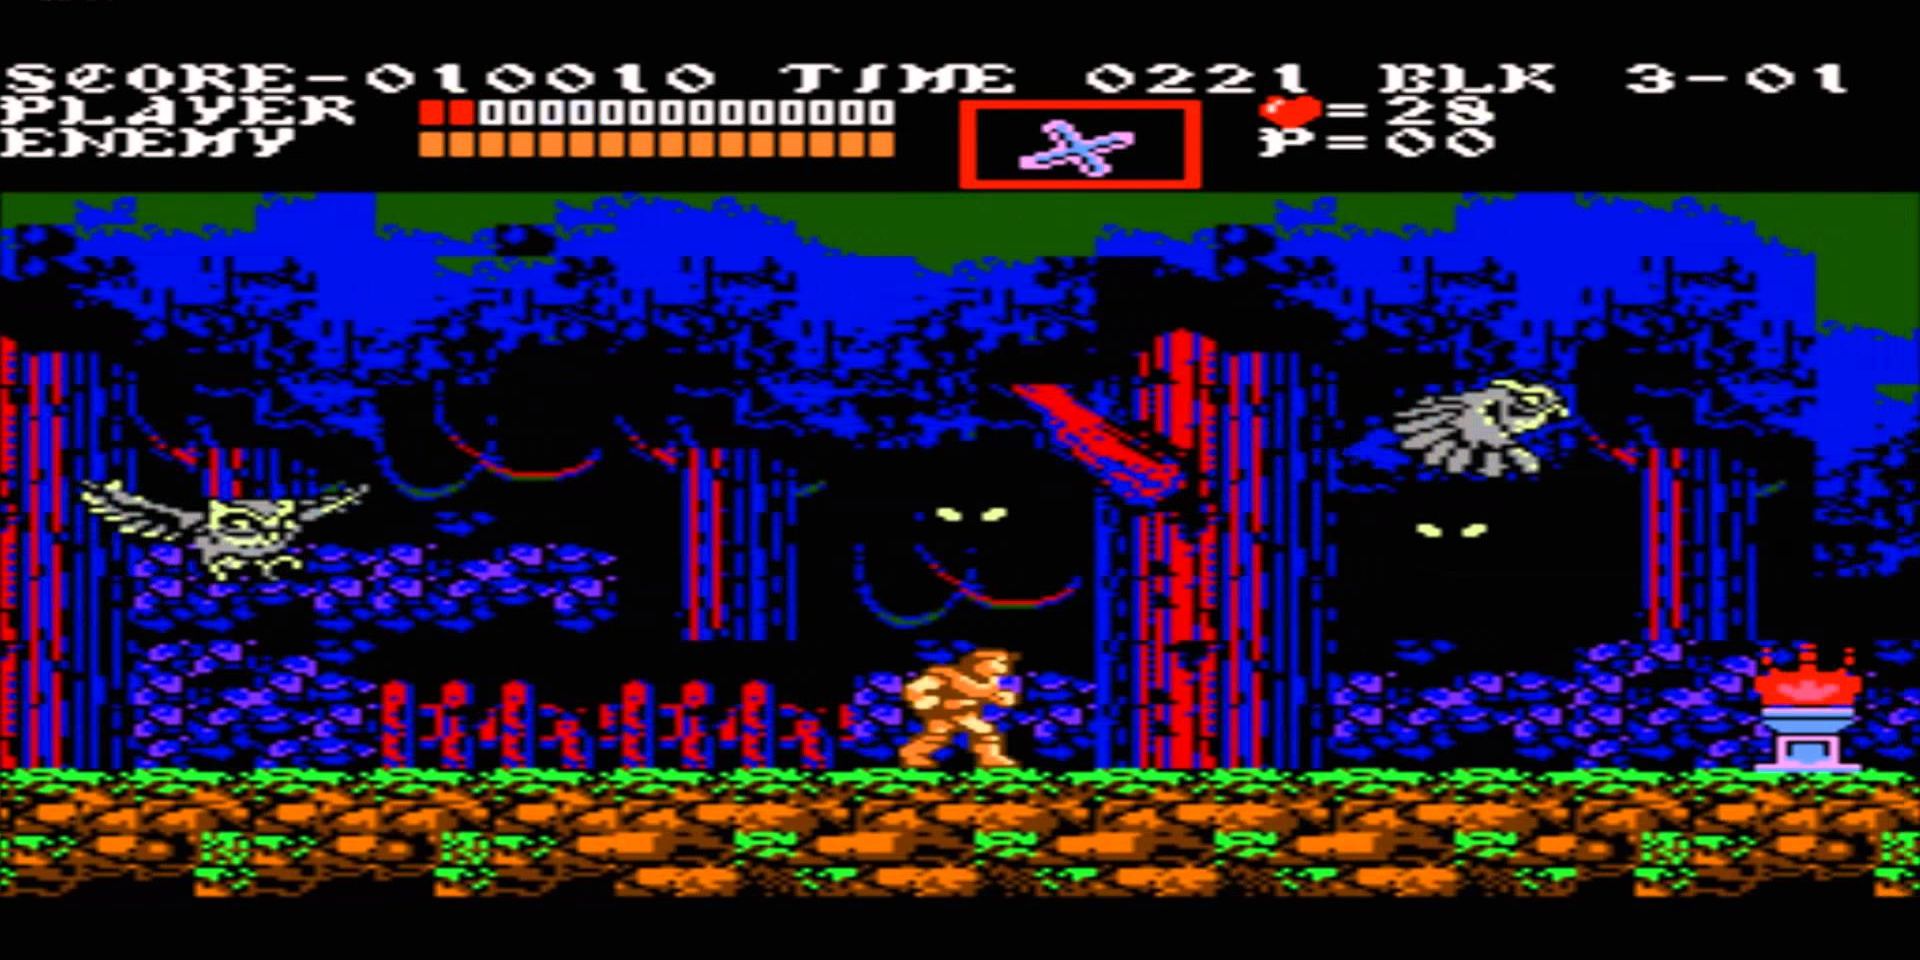 A screenshot of the NES video game Castlevania III: Dracula's Curse.